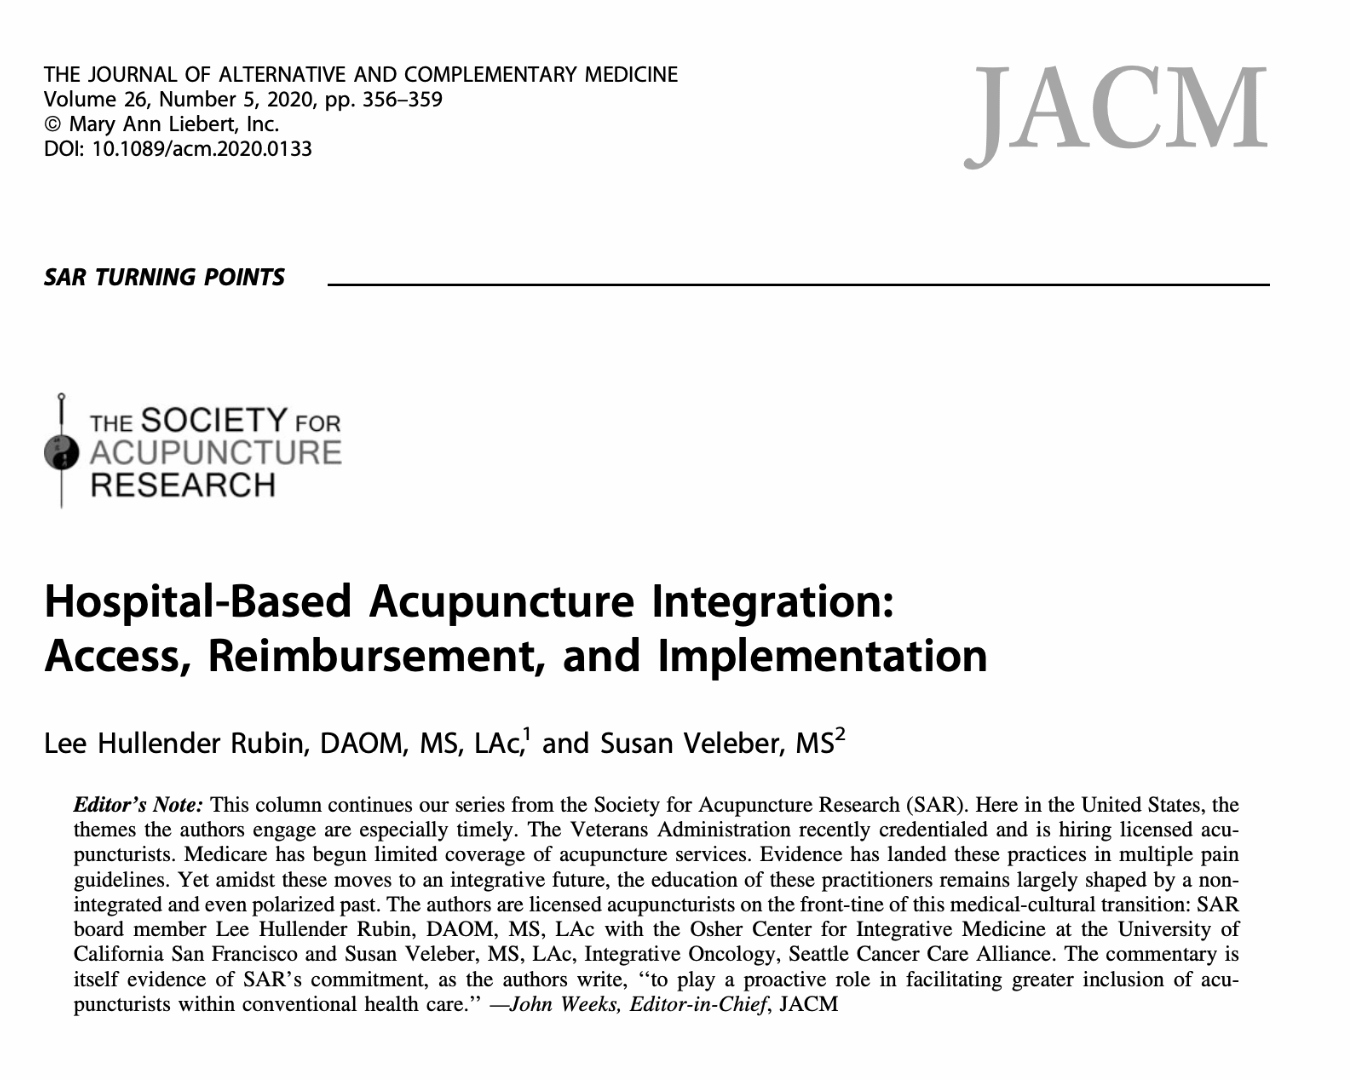 Hospital-Based Acupuncture Integration: Access, Reimbursement, and Implementation